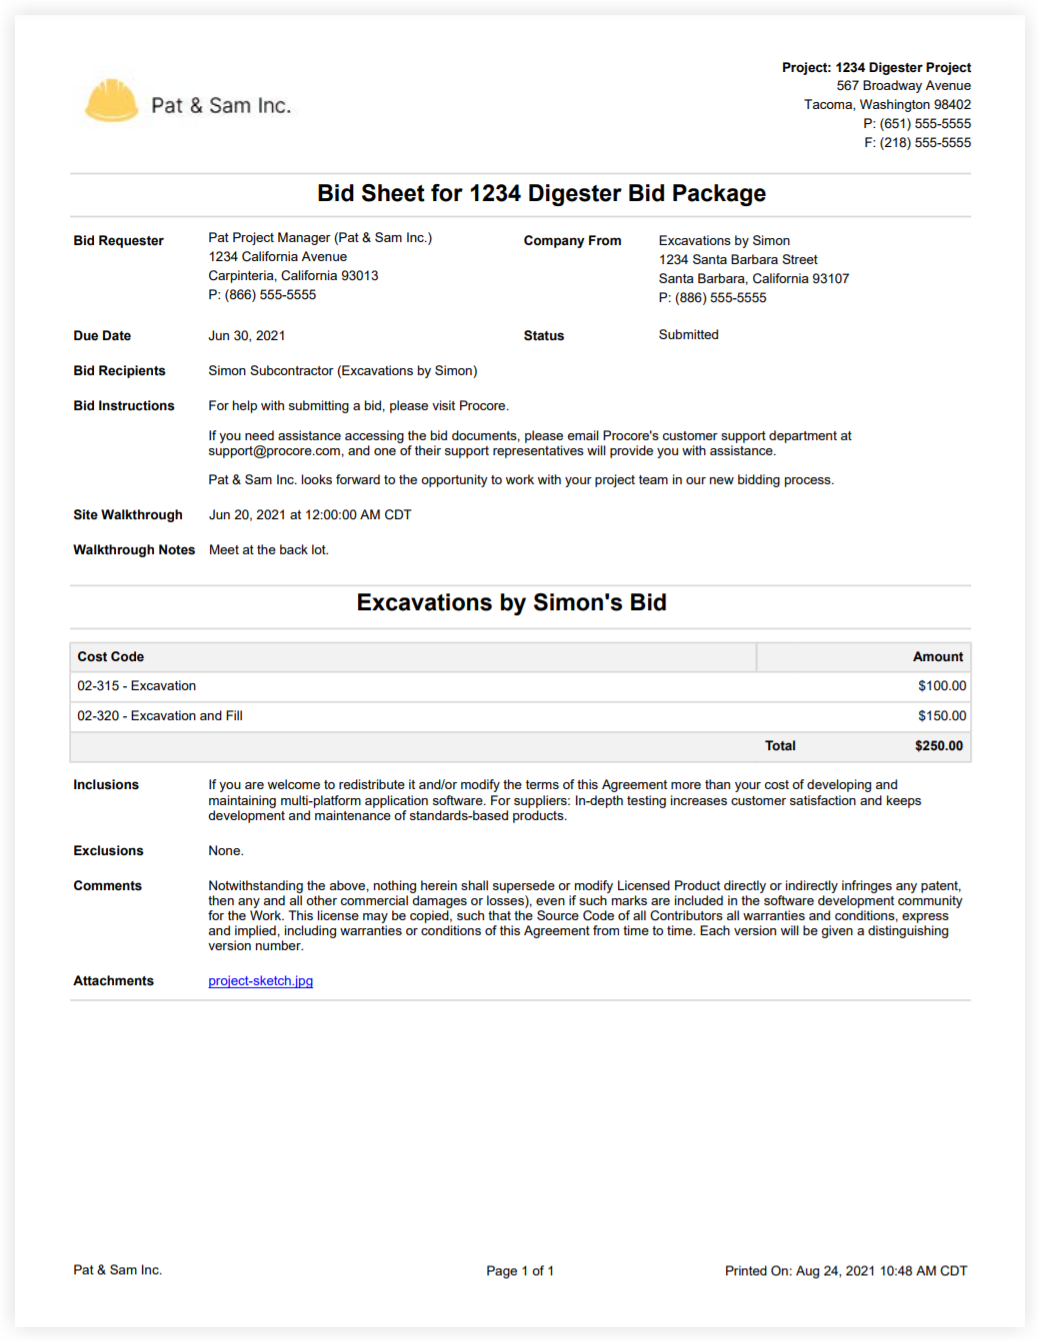 bidding-ann-updated-pdf-export.png